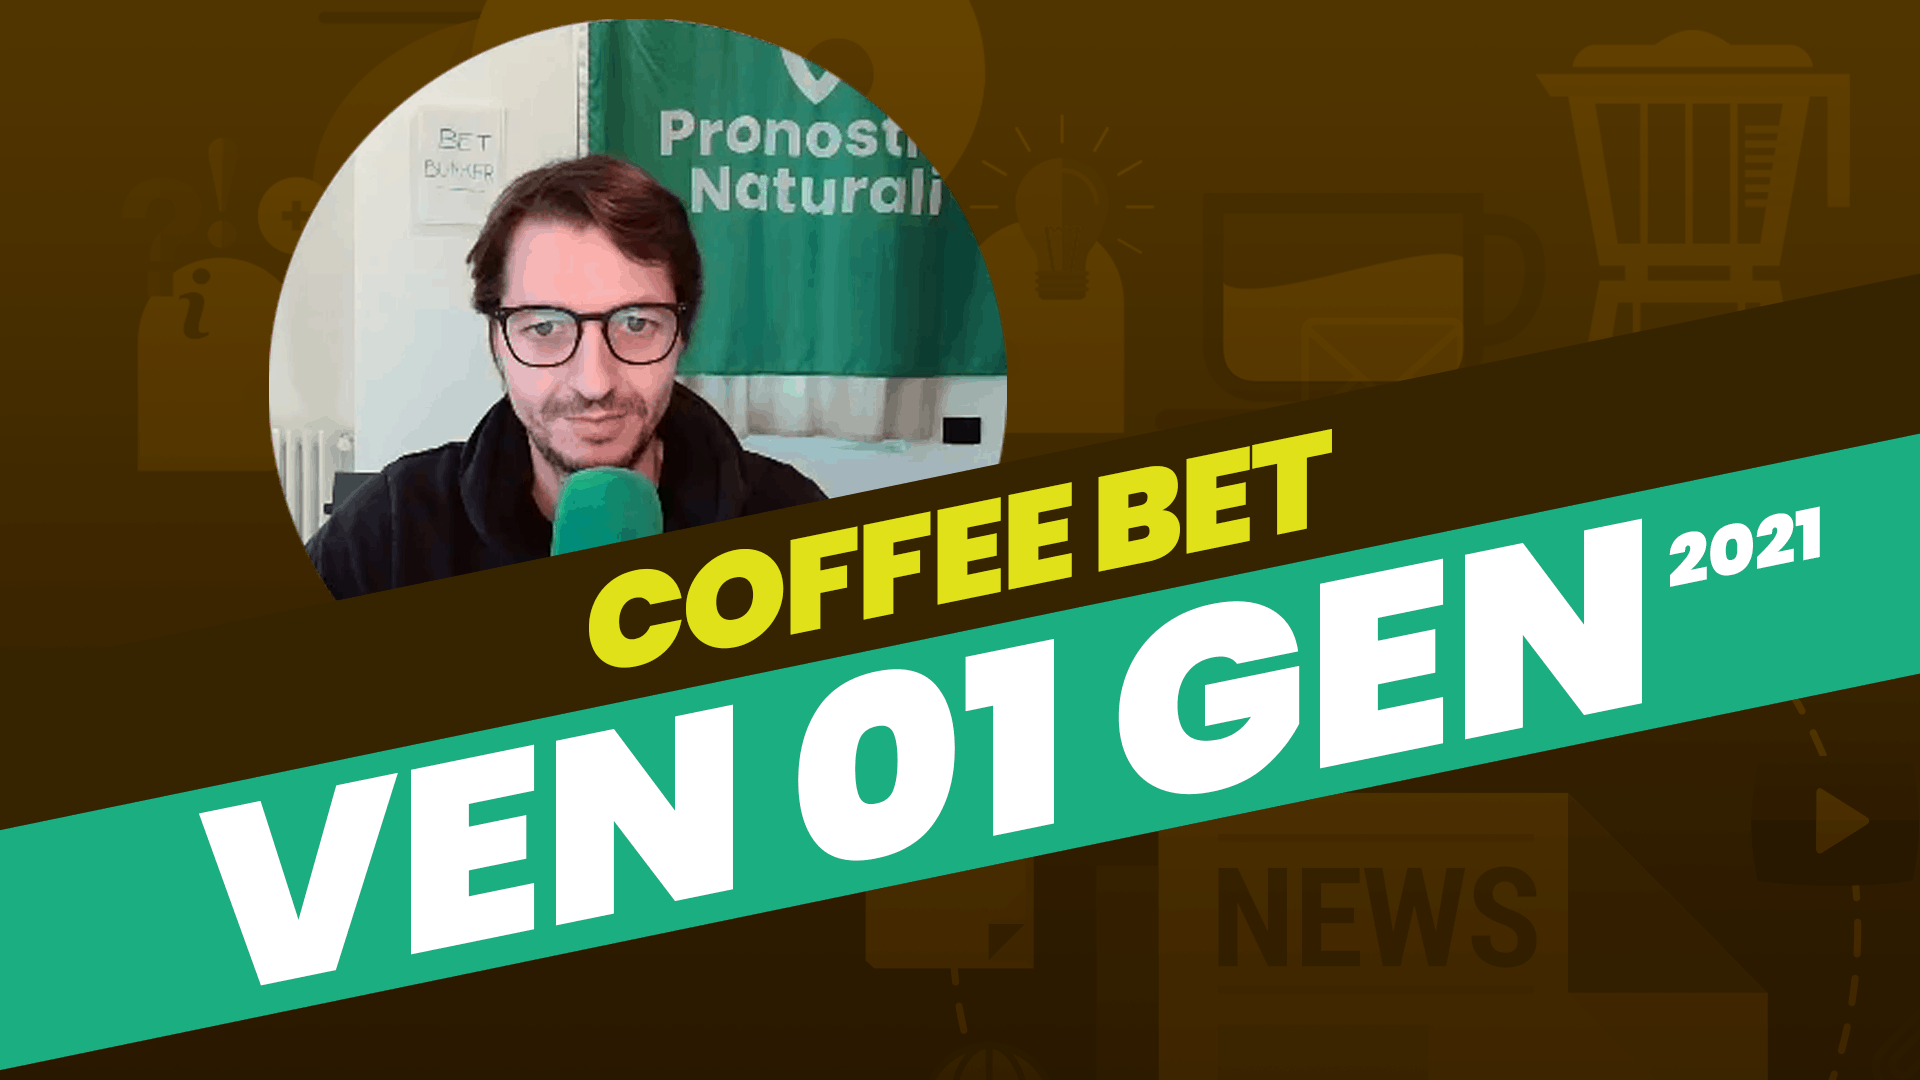 Pronostici Naturali Video Scommesse Betting Coffee Bet Calcio Tabellone 01 Gennaio 2020